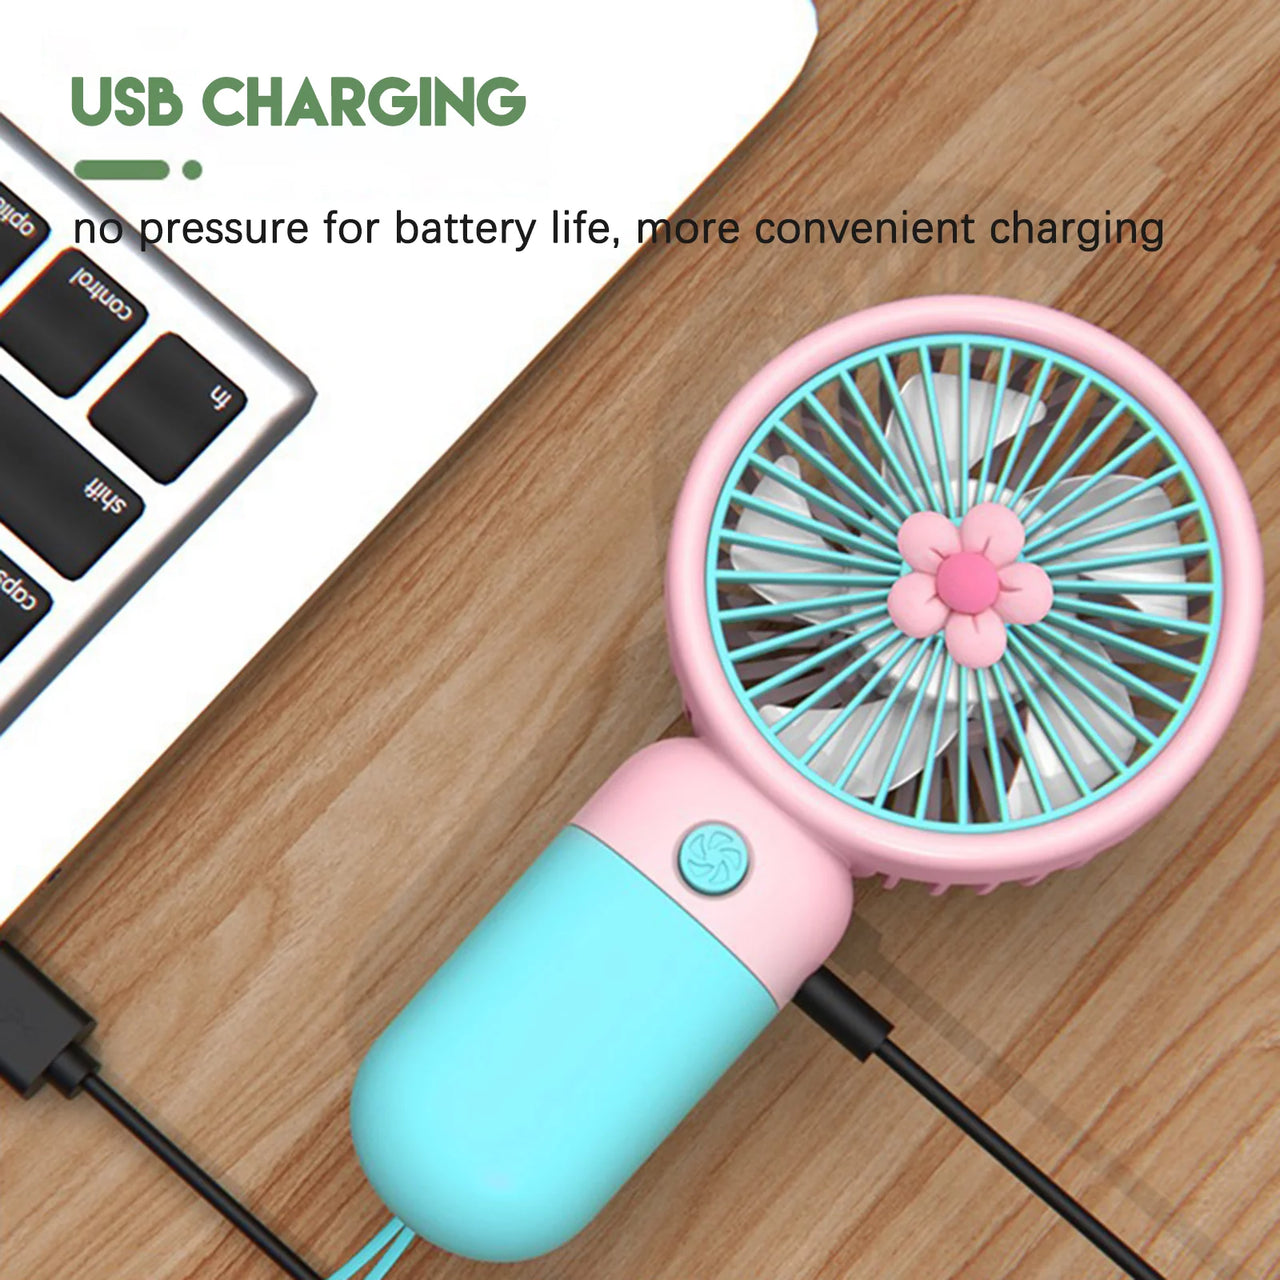 Mini Flower Design Handheld & Desktop Fan With USB